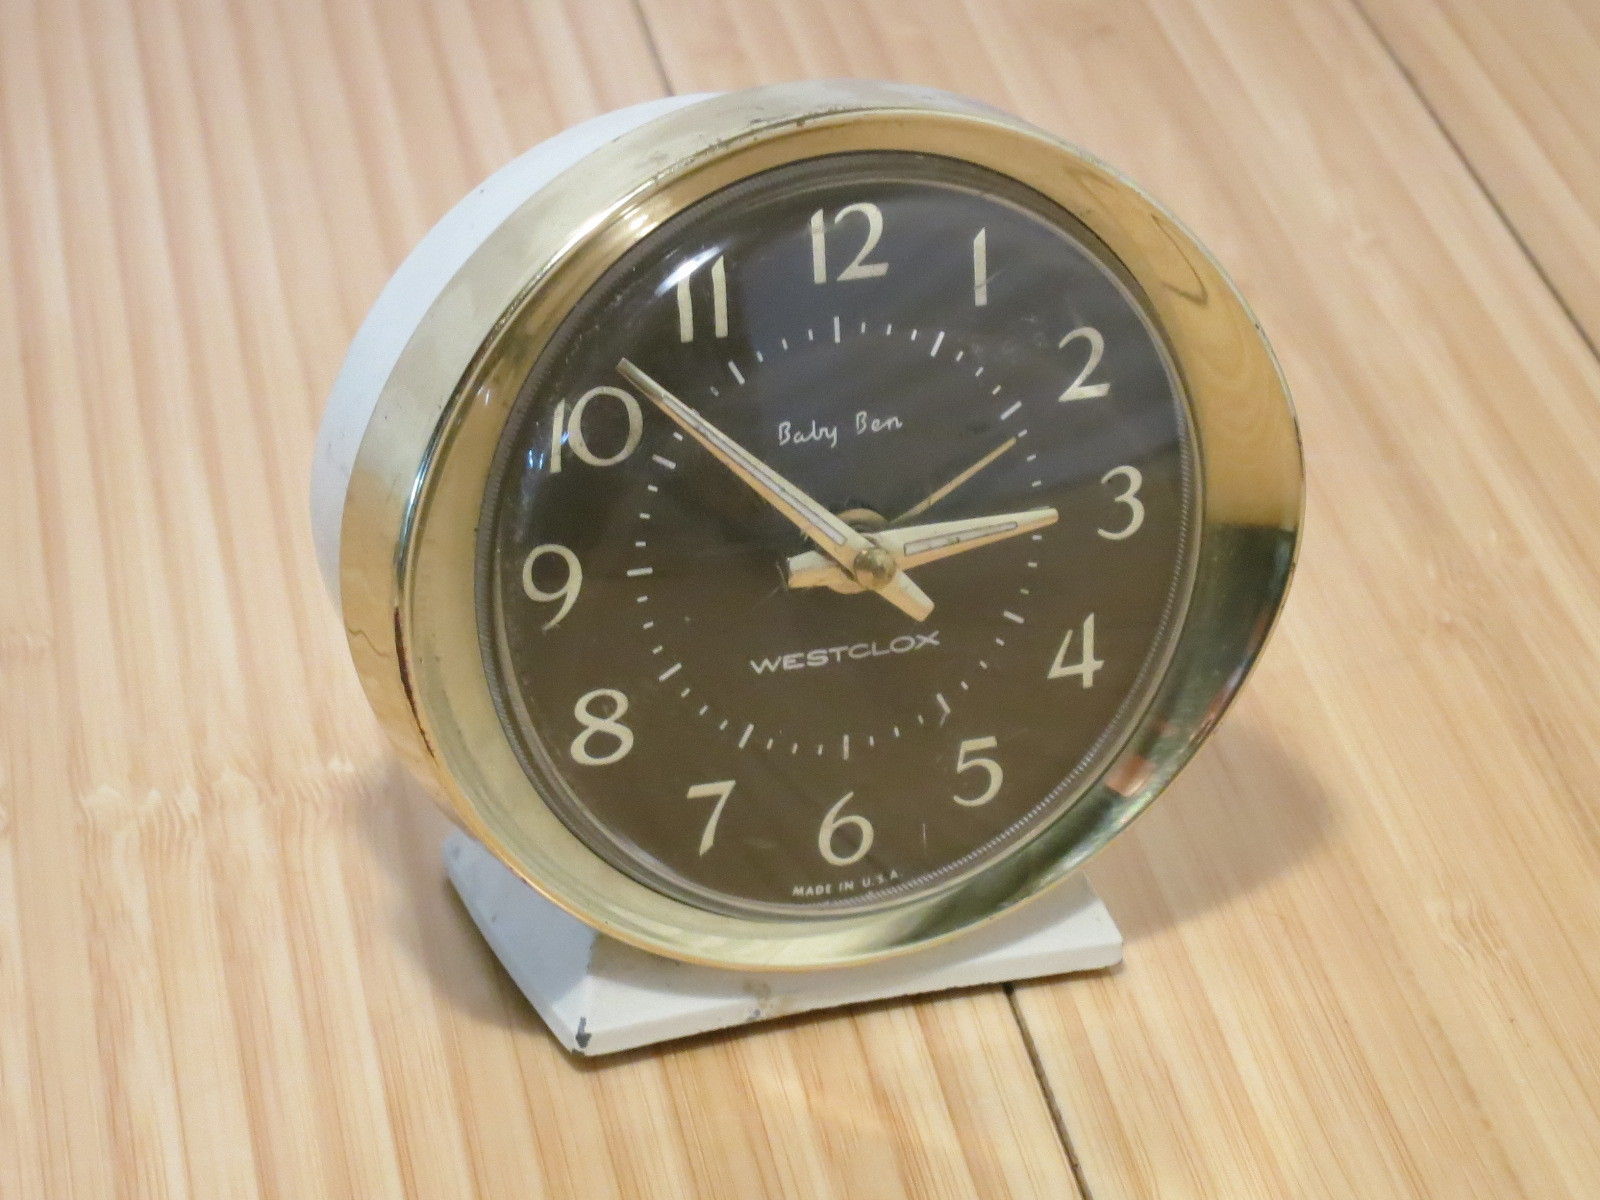 Details about   Vtg Westclox BABY BEN Wind Up Alarm Clock Model 61-Y Luminous Hands Black Gold 